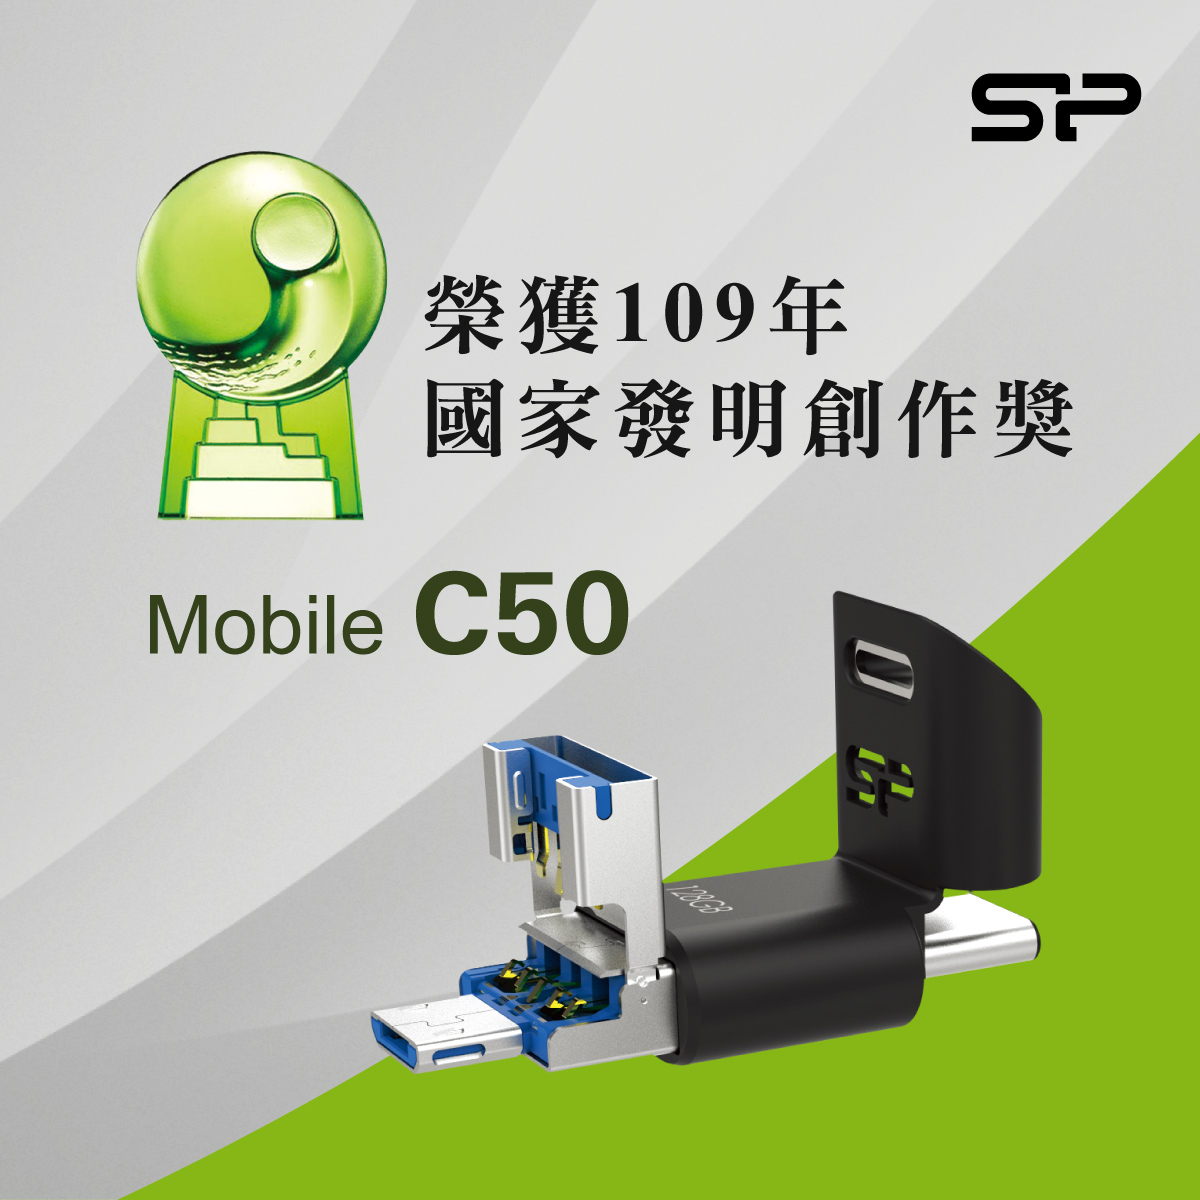 Mobile C50